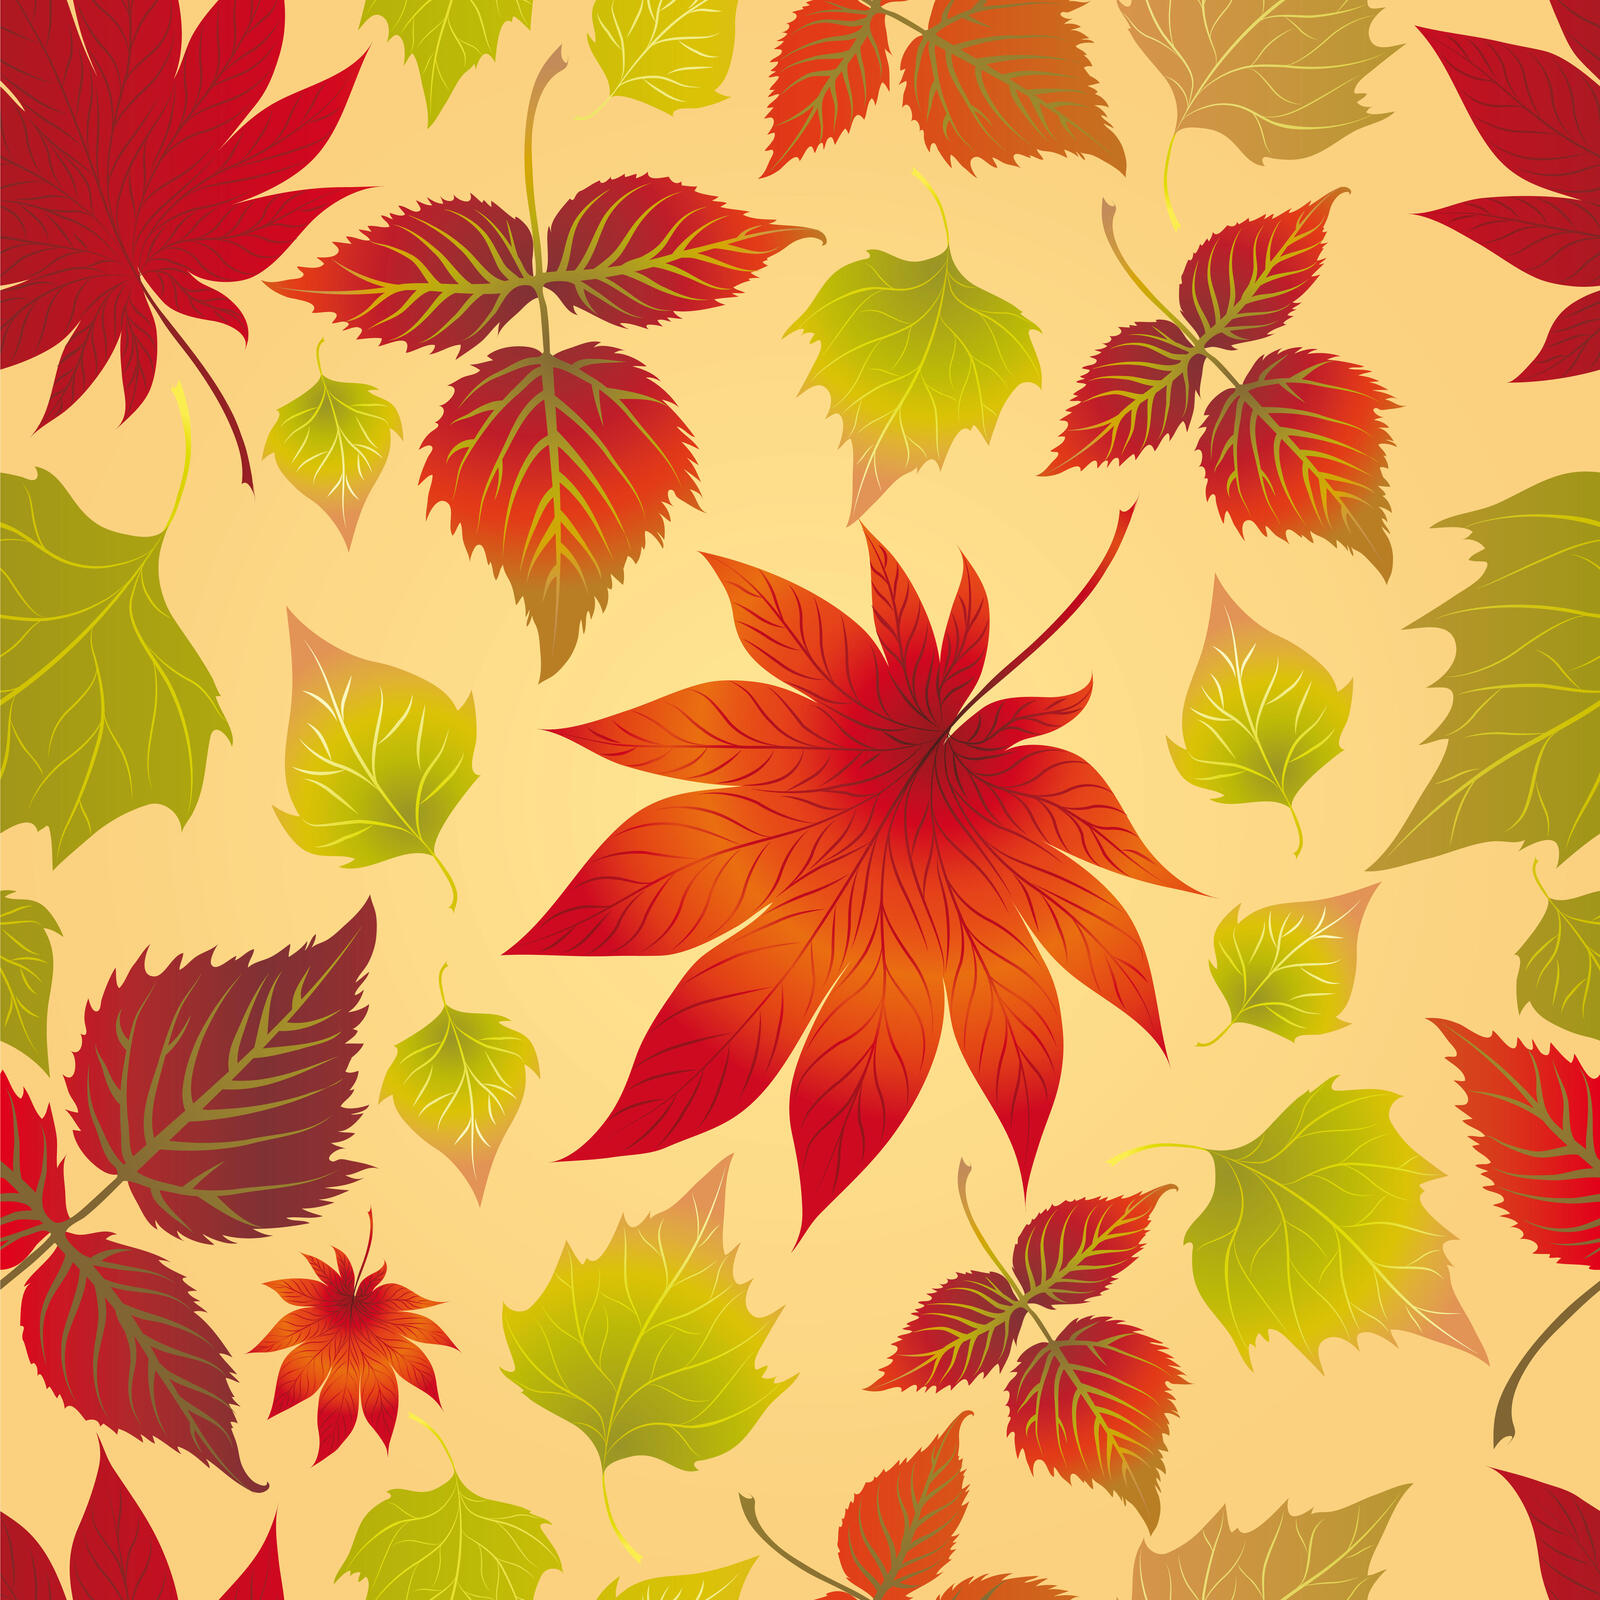 Wallpapers textures autumn leaves artstation on the desktop